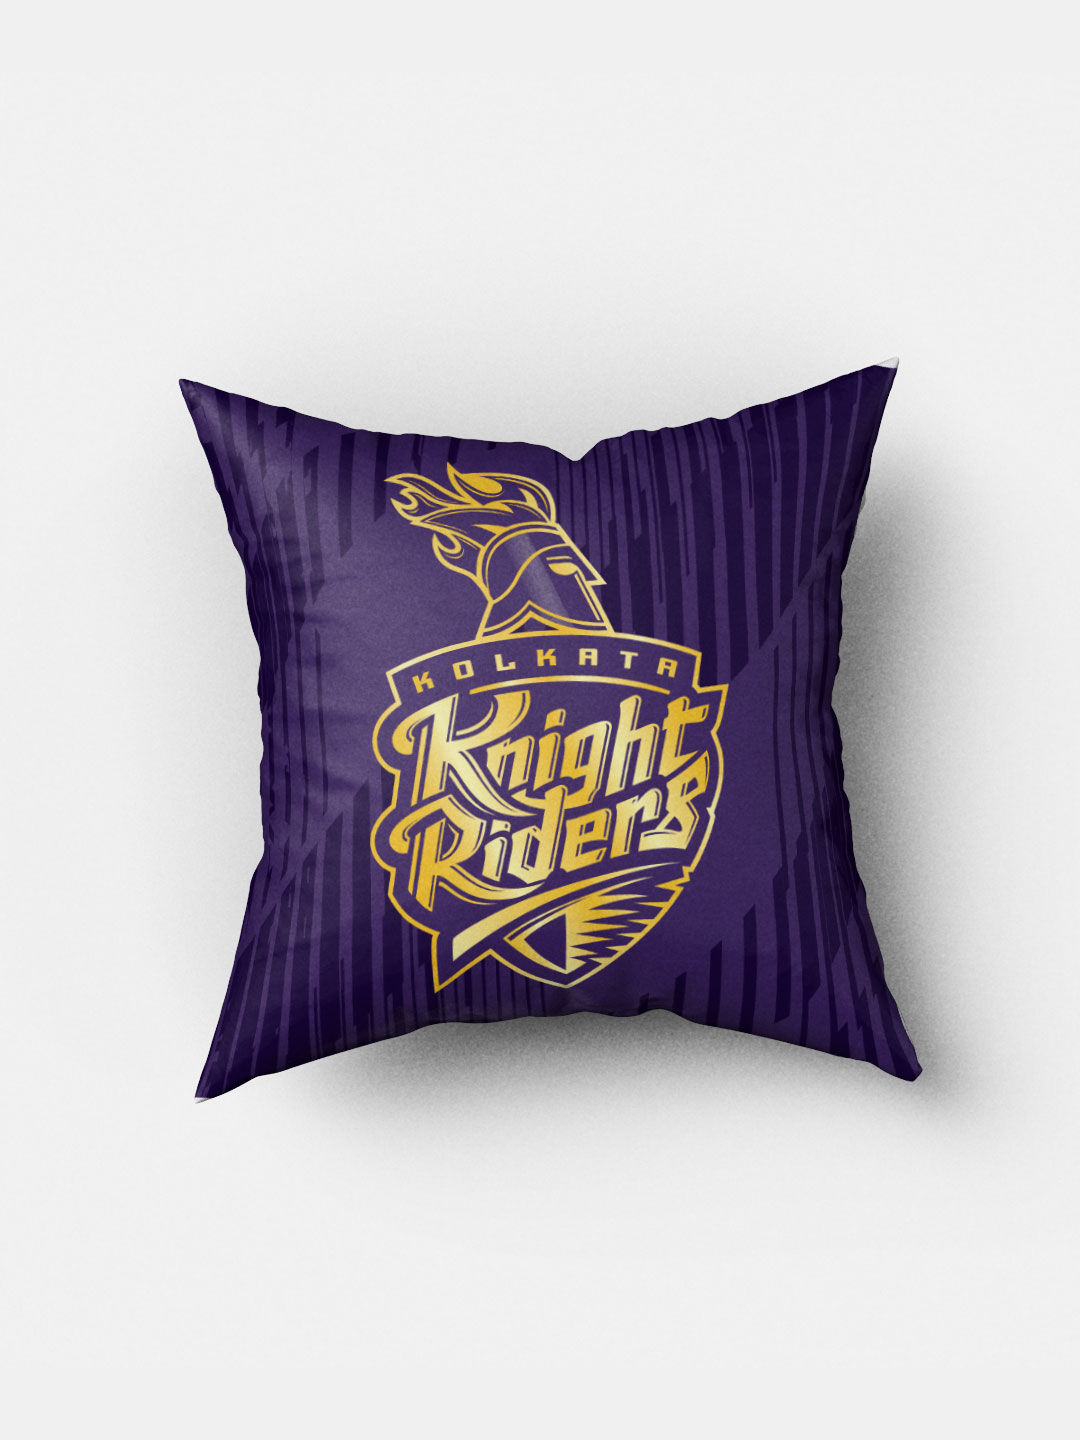 Buy KKR Emblem - Square Pillows Pillow Online